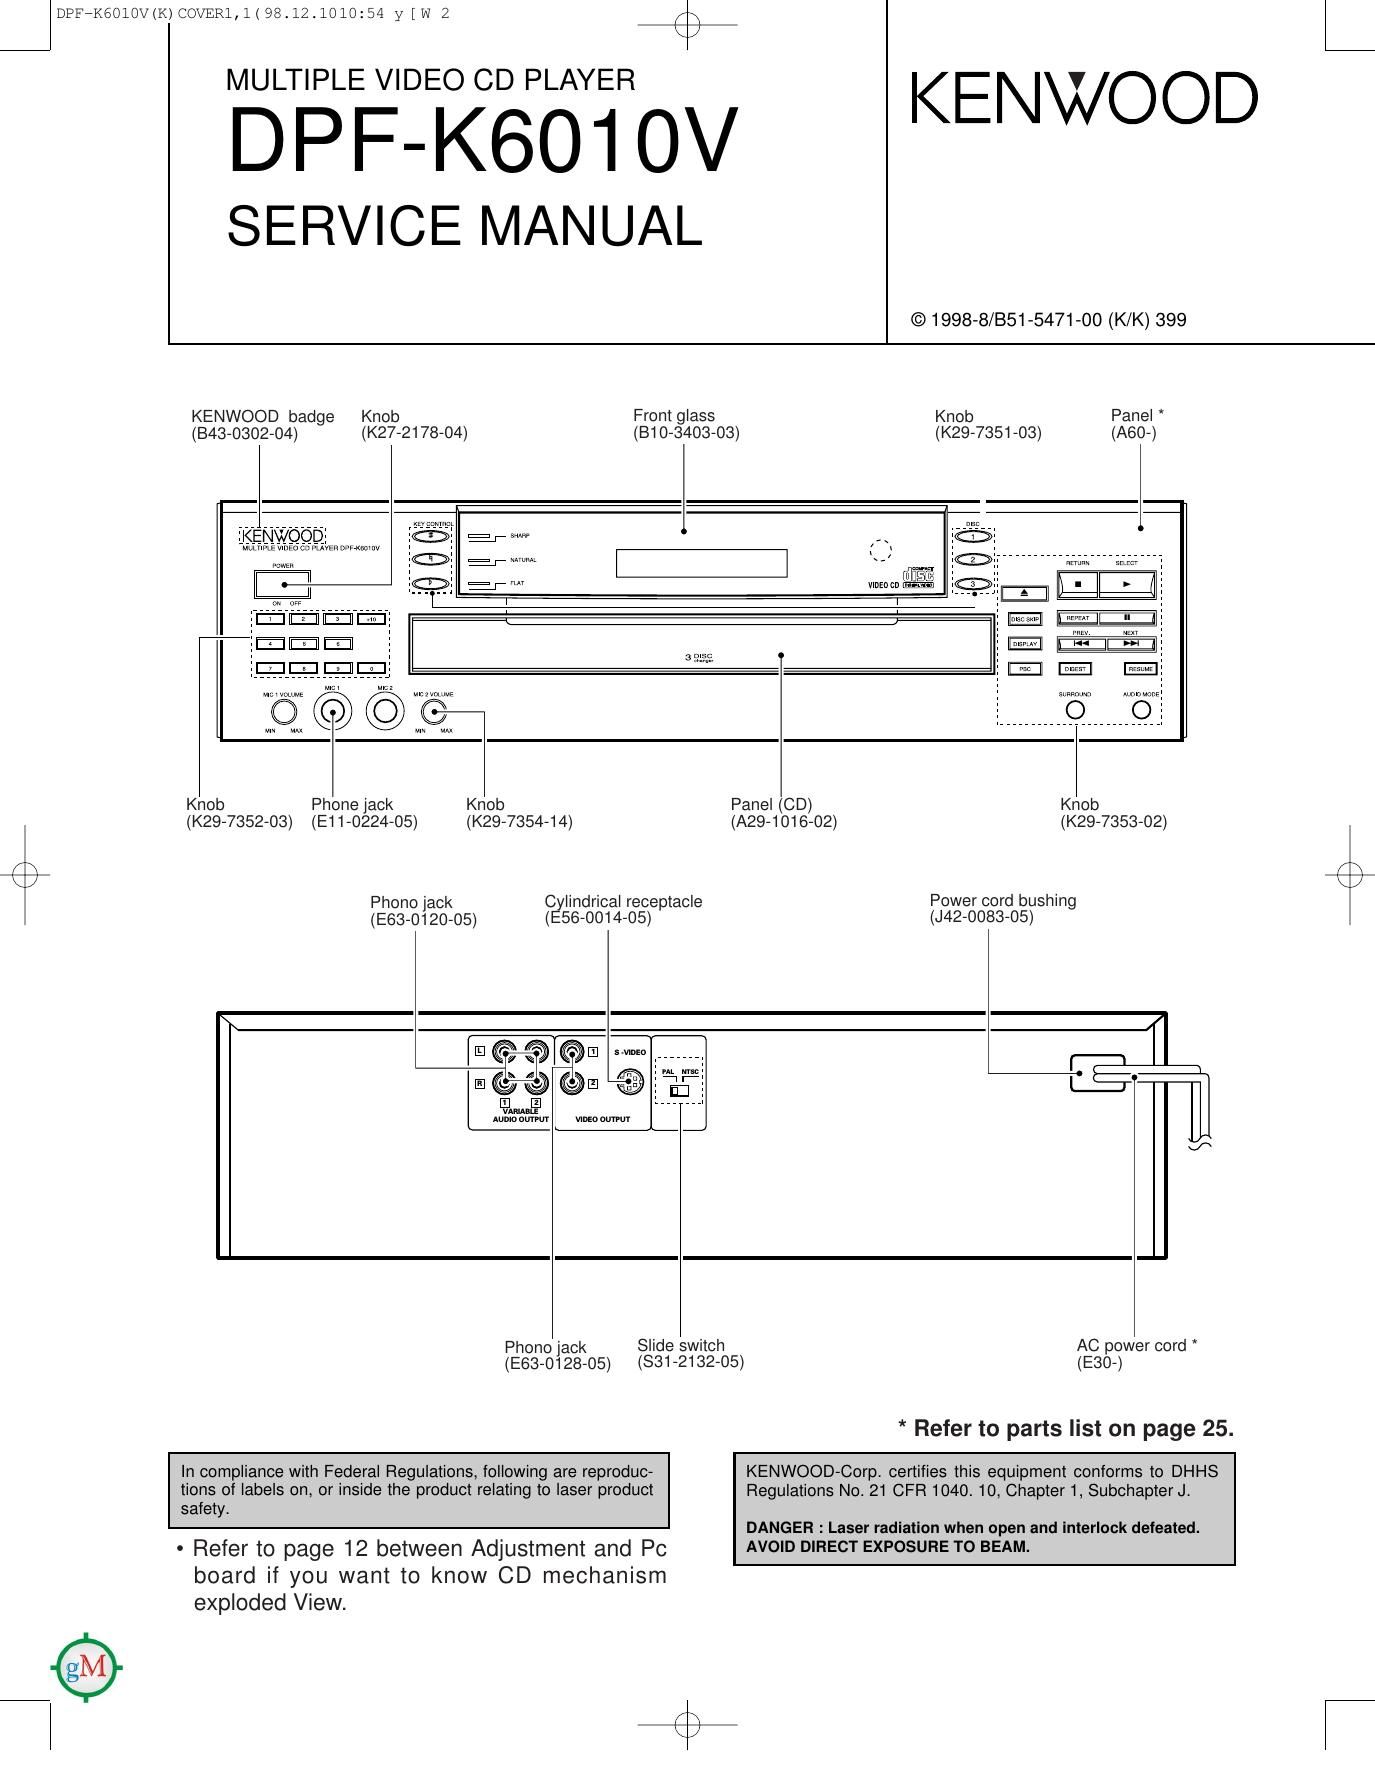 Kenwood DPFK 6010 V Service Manual